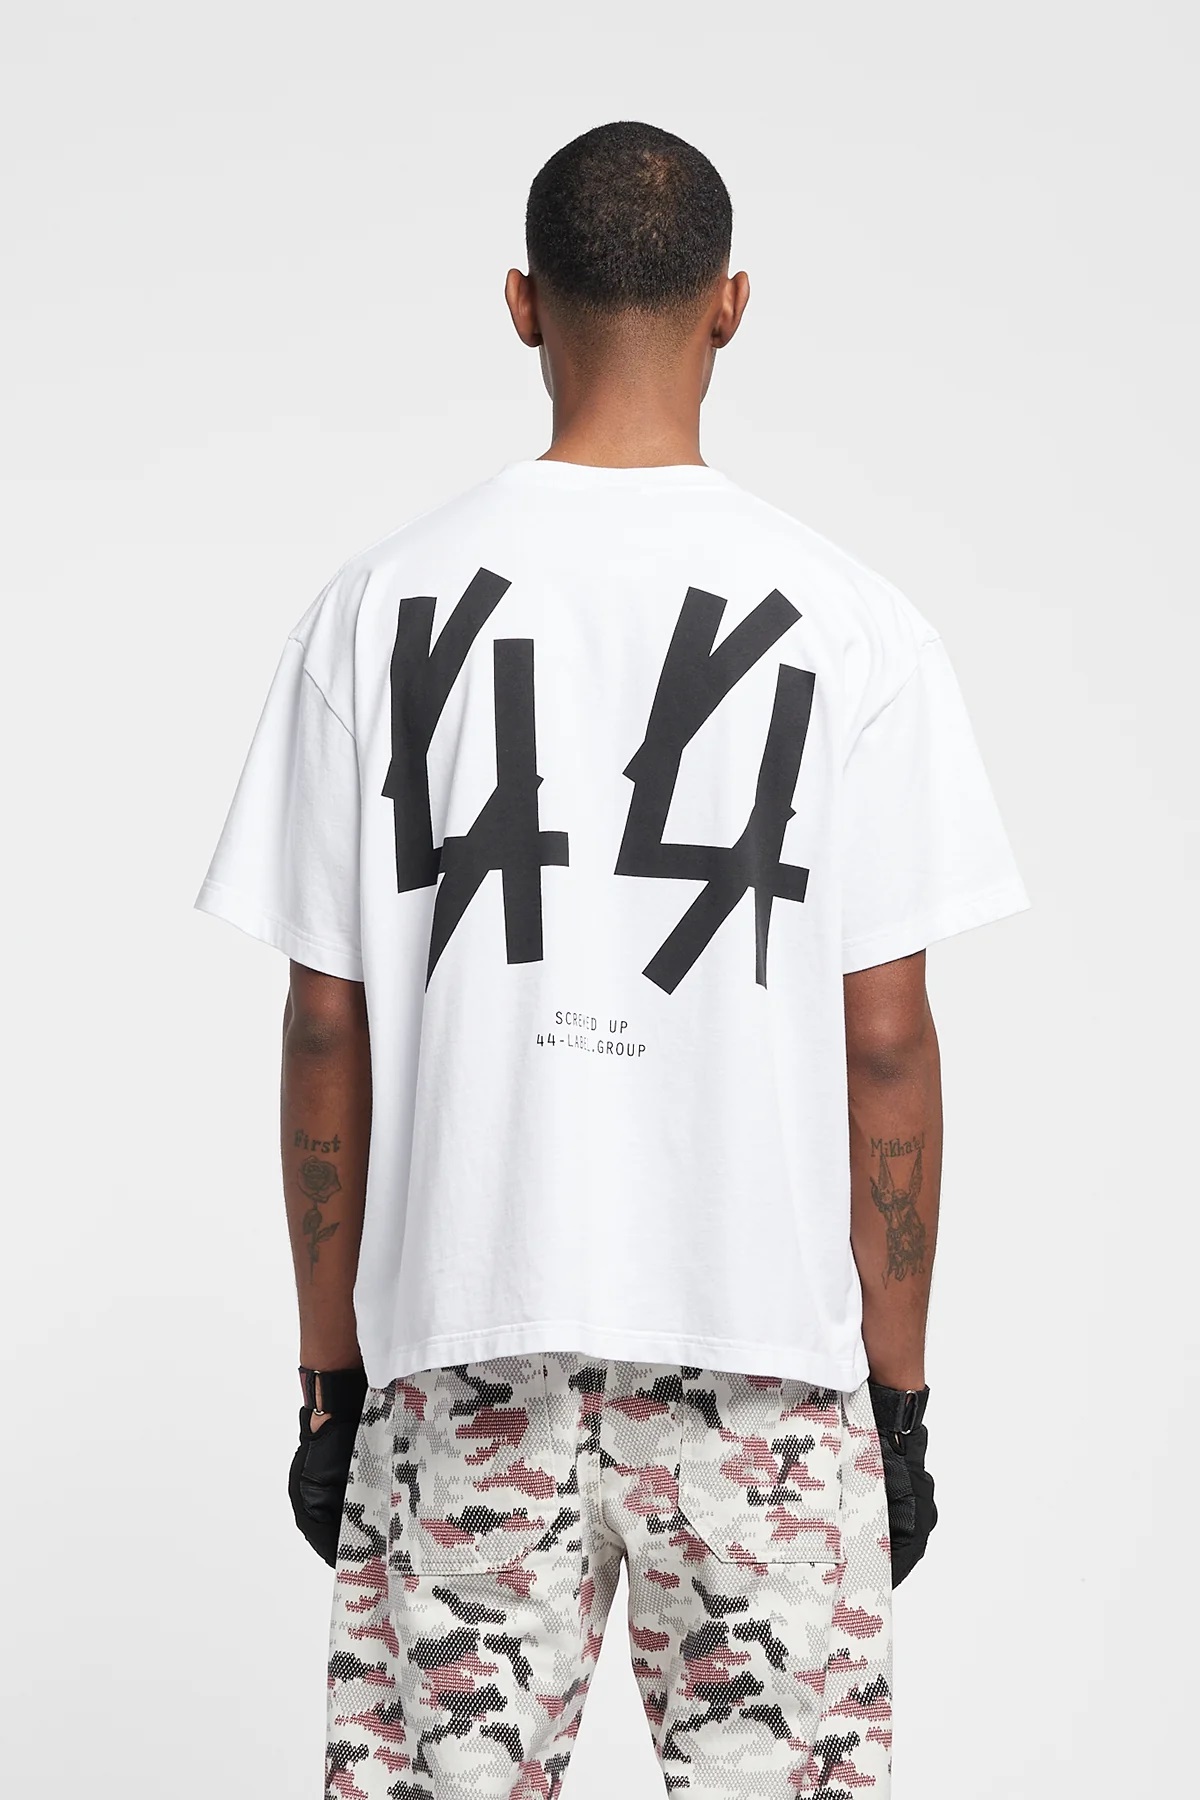 44 LABEL GROUP Original T-Shirt in White/Black Backprint